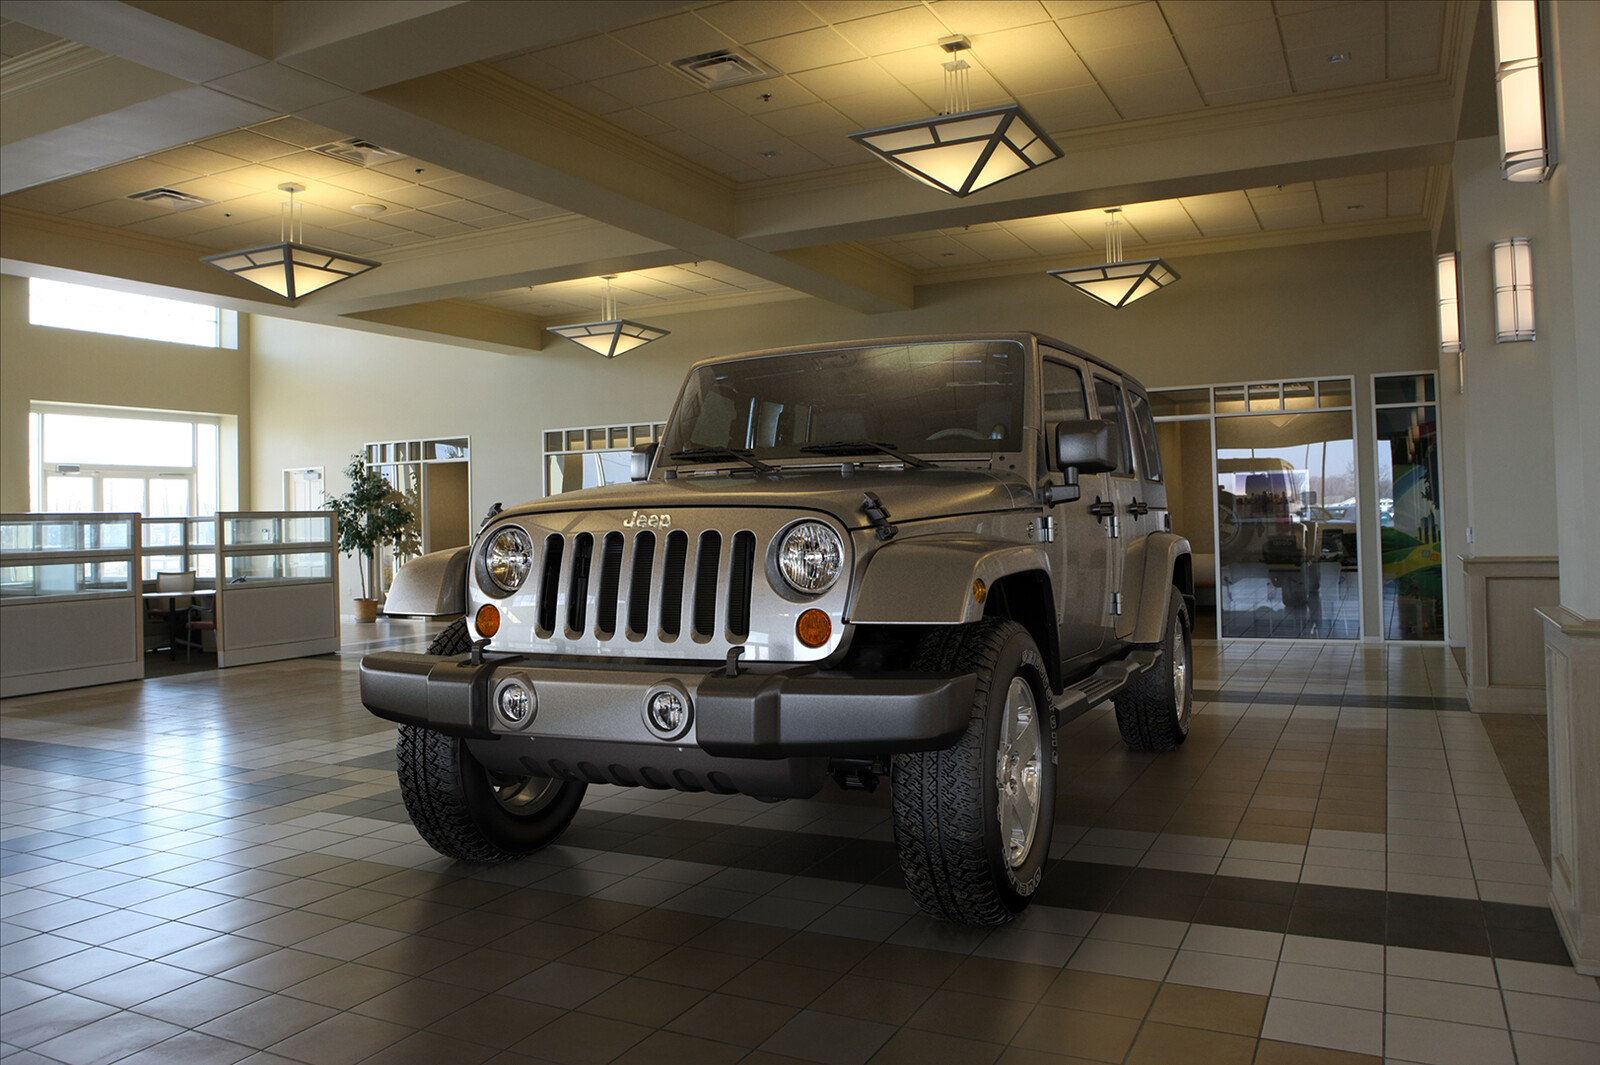 Jeep Wrangler: Fully CG Vehicle
Tasks: Materials, Lighting, &amp; Retouching